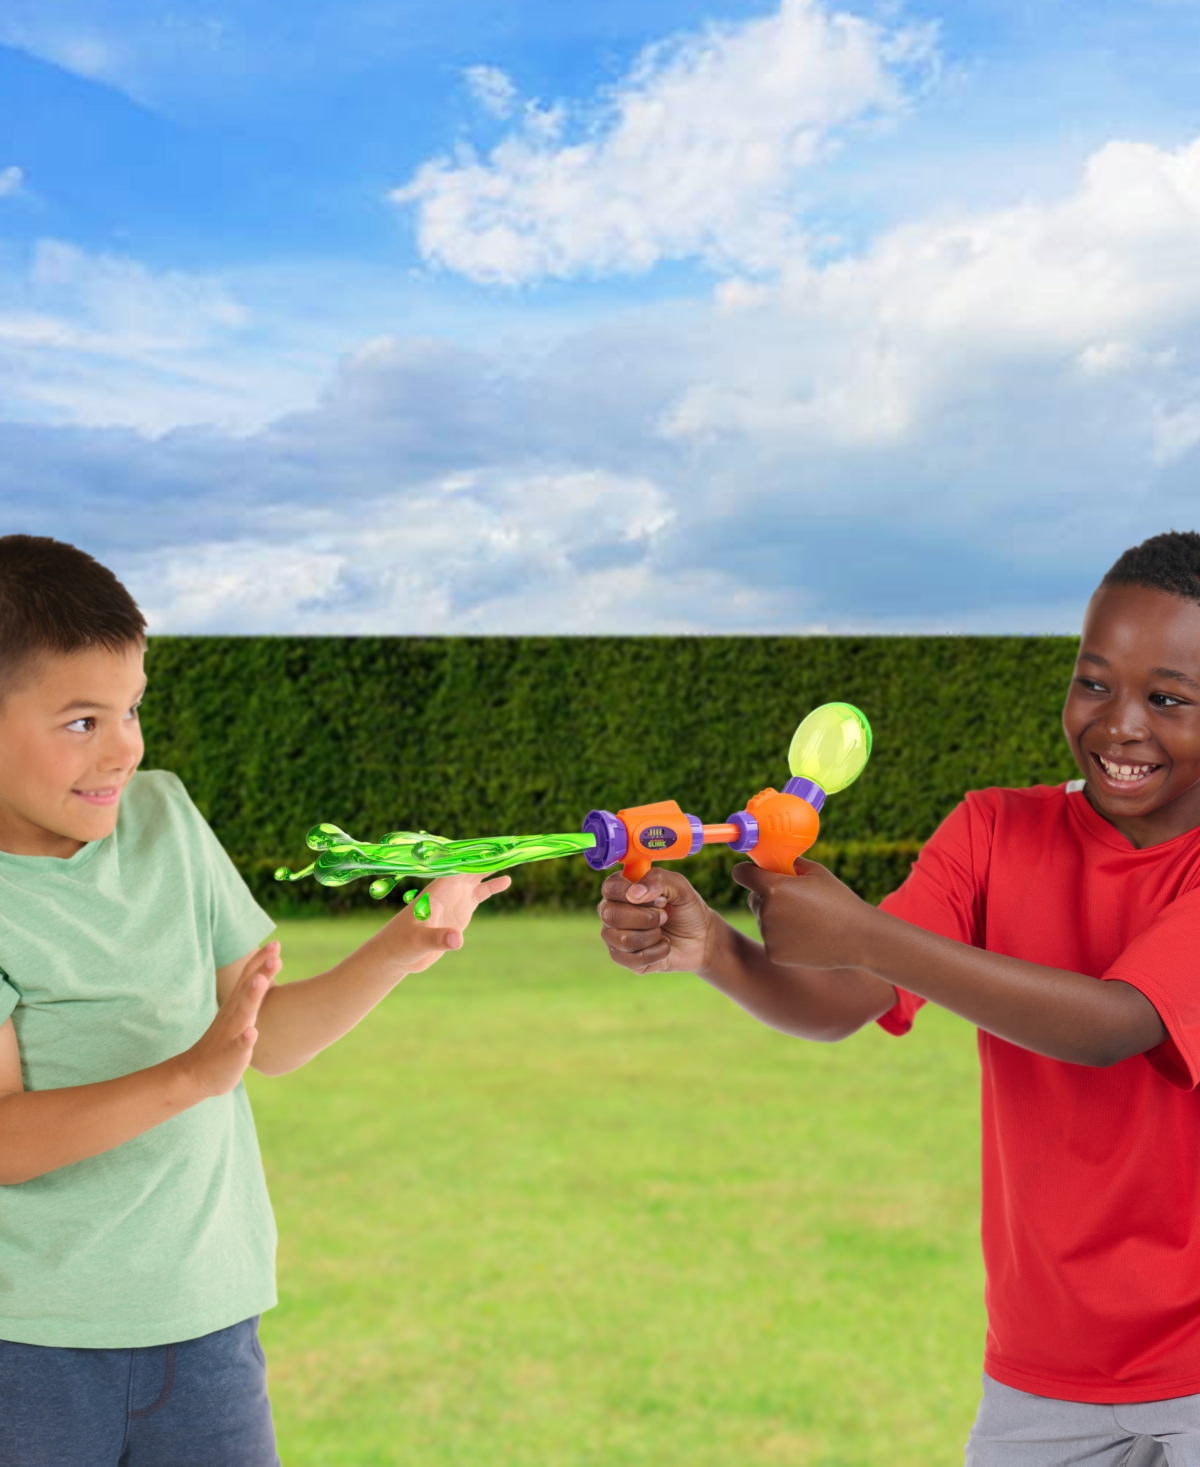 Shop Nerf Nickelodeon Slime Brand Compound Splat Splasher In Multicolor